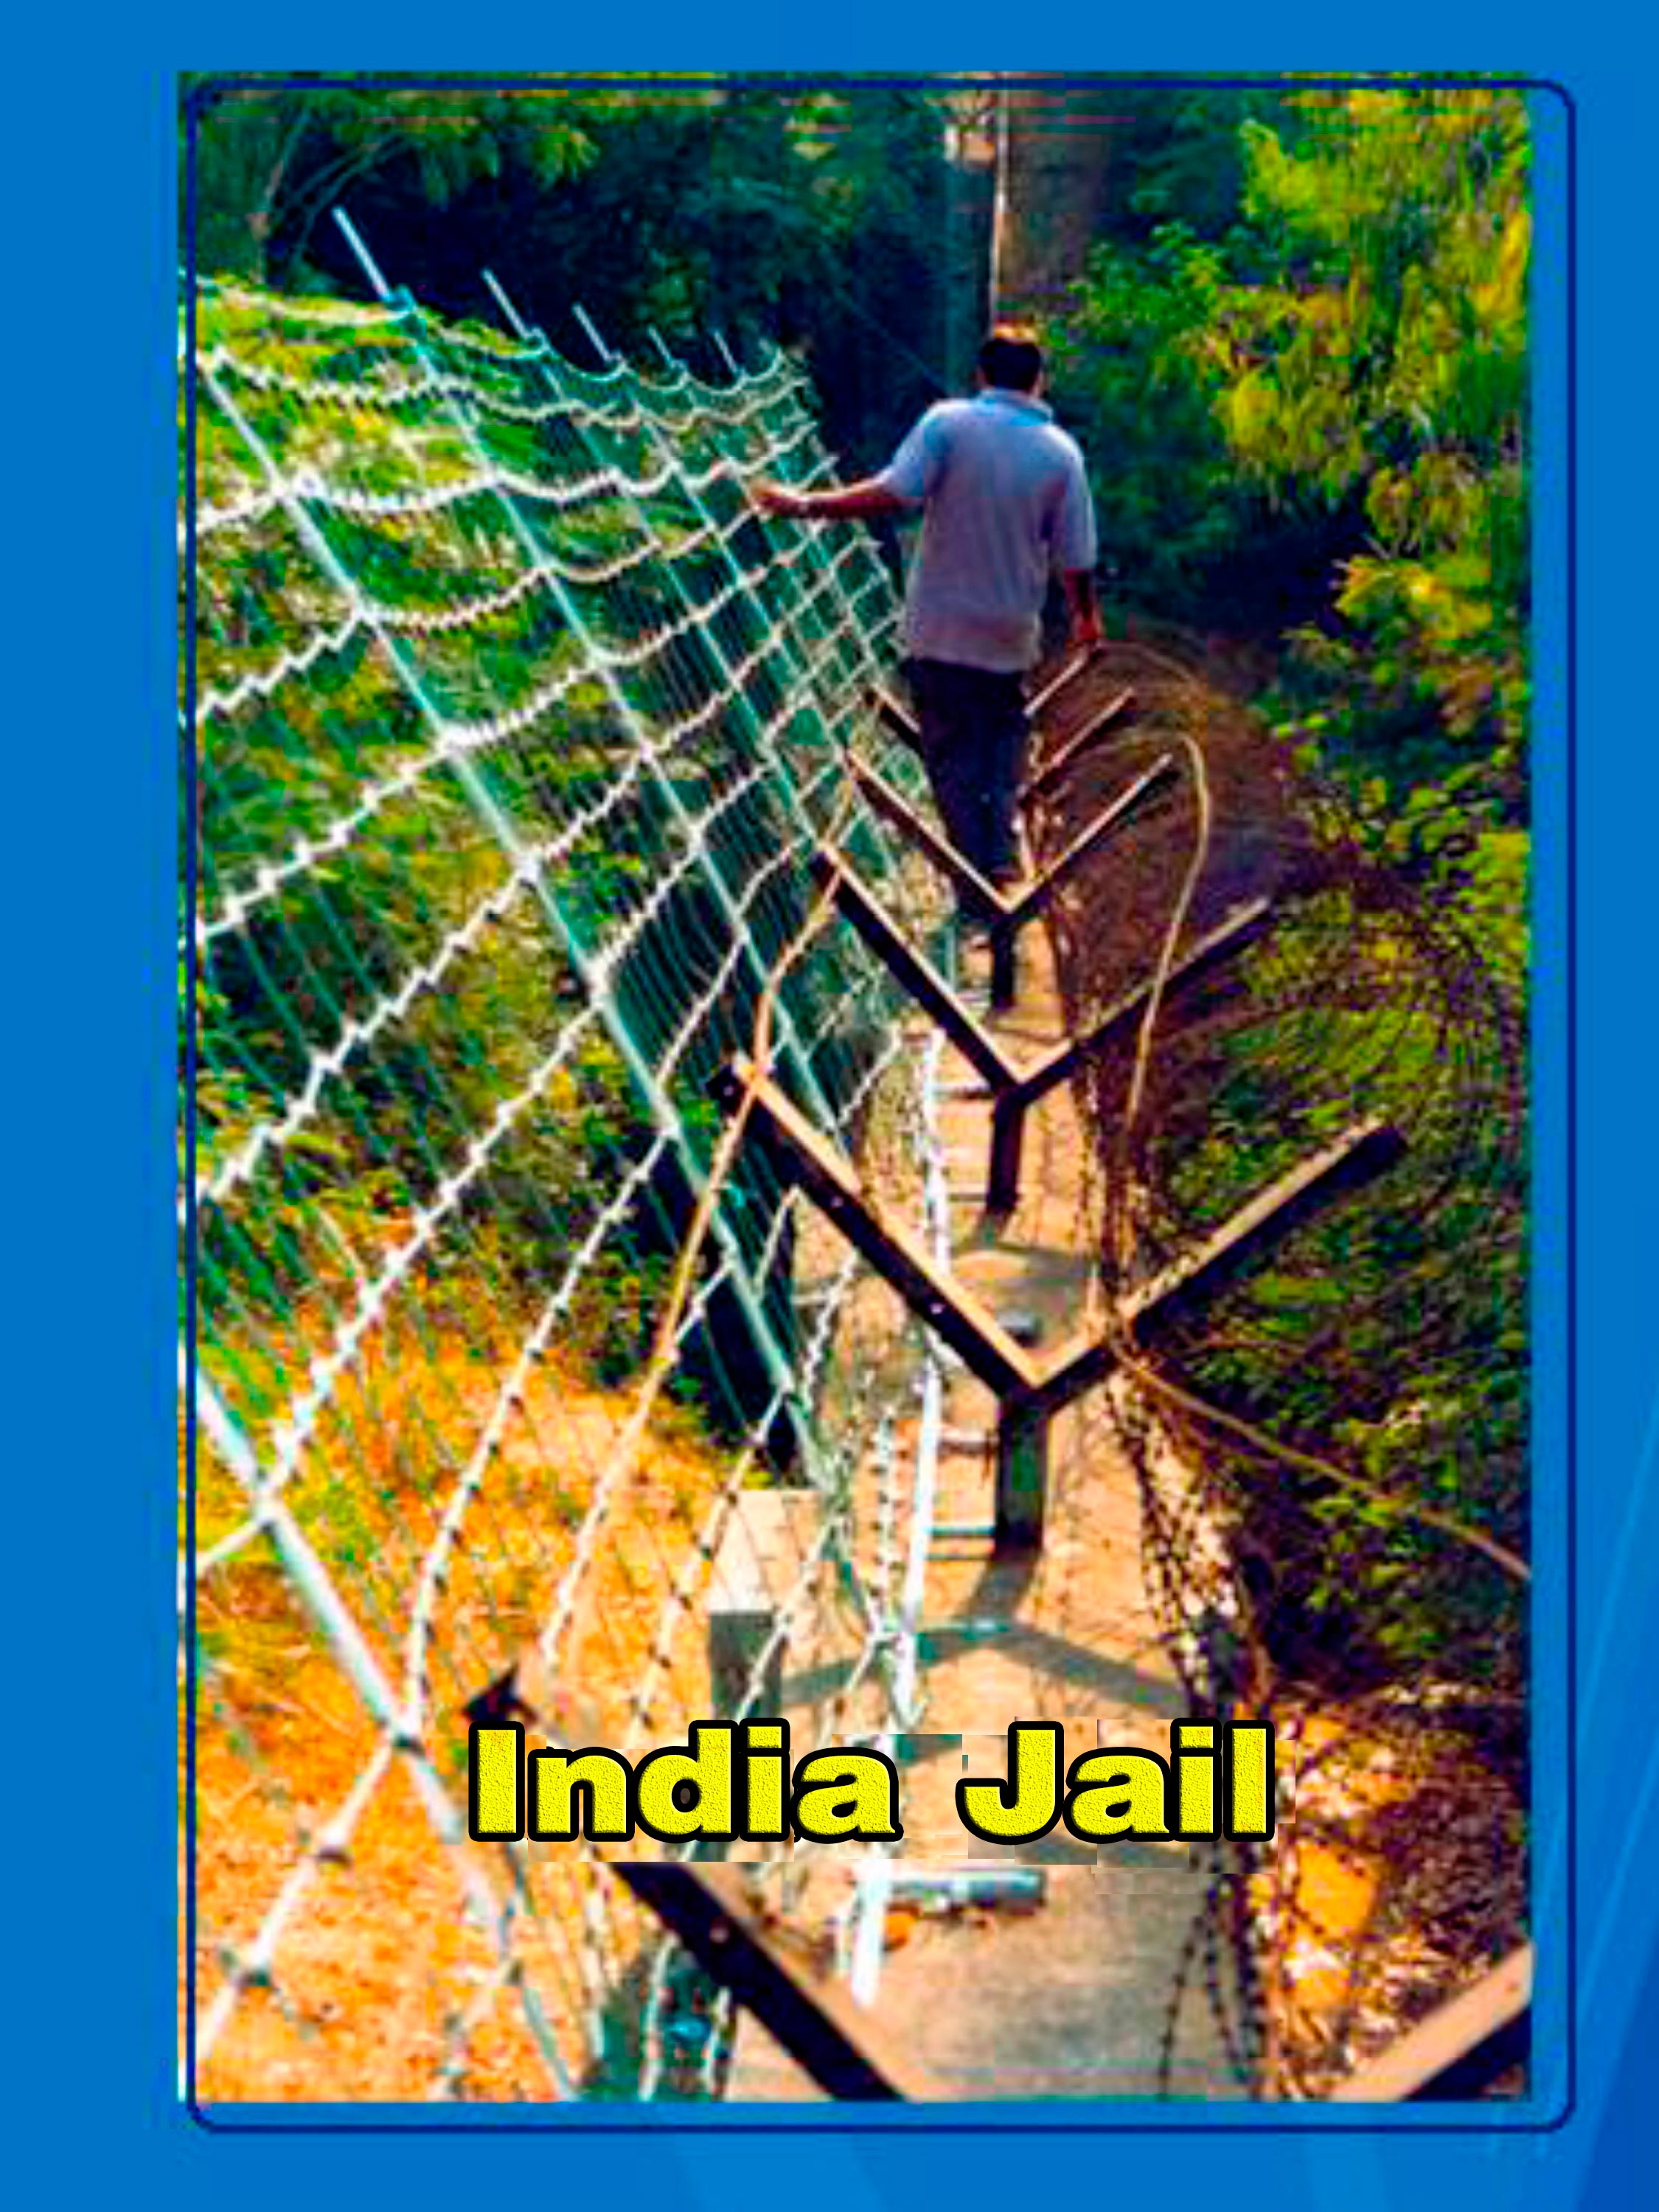 01 India Jail